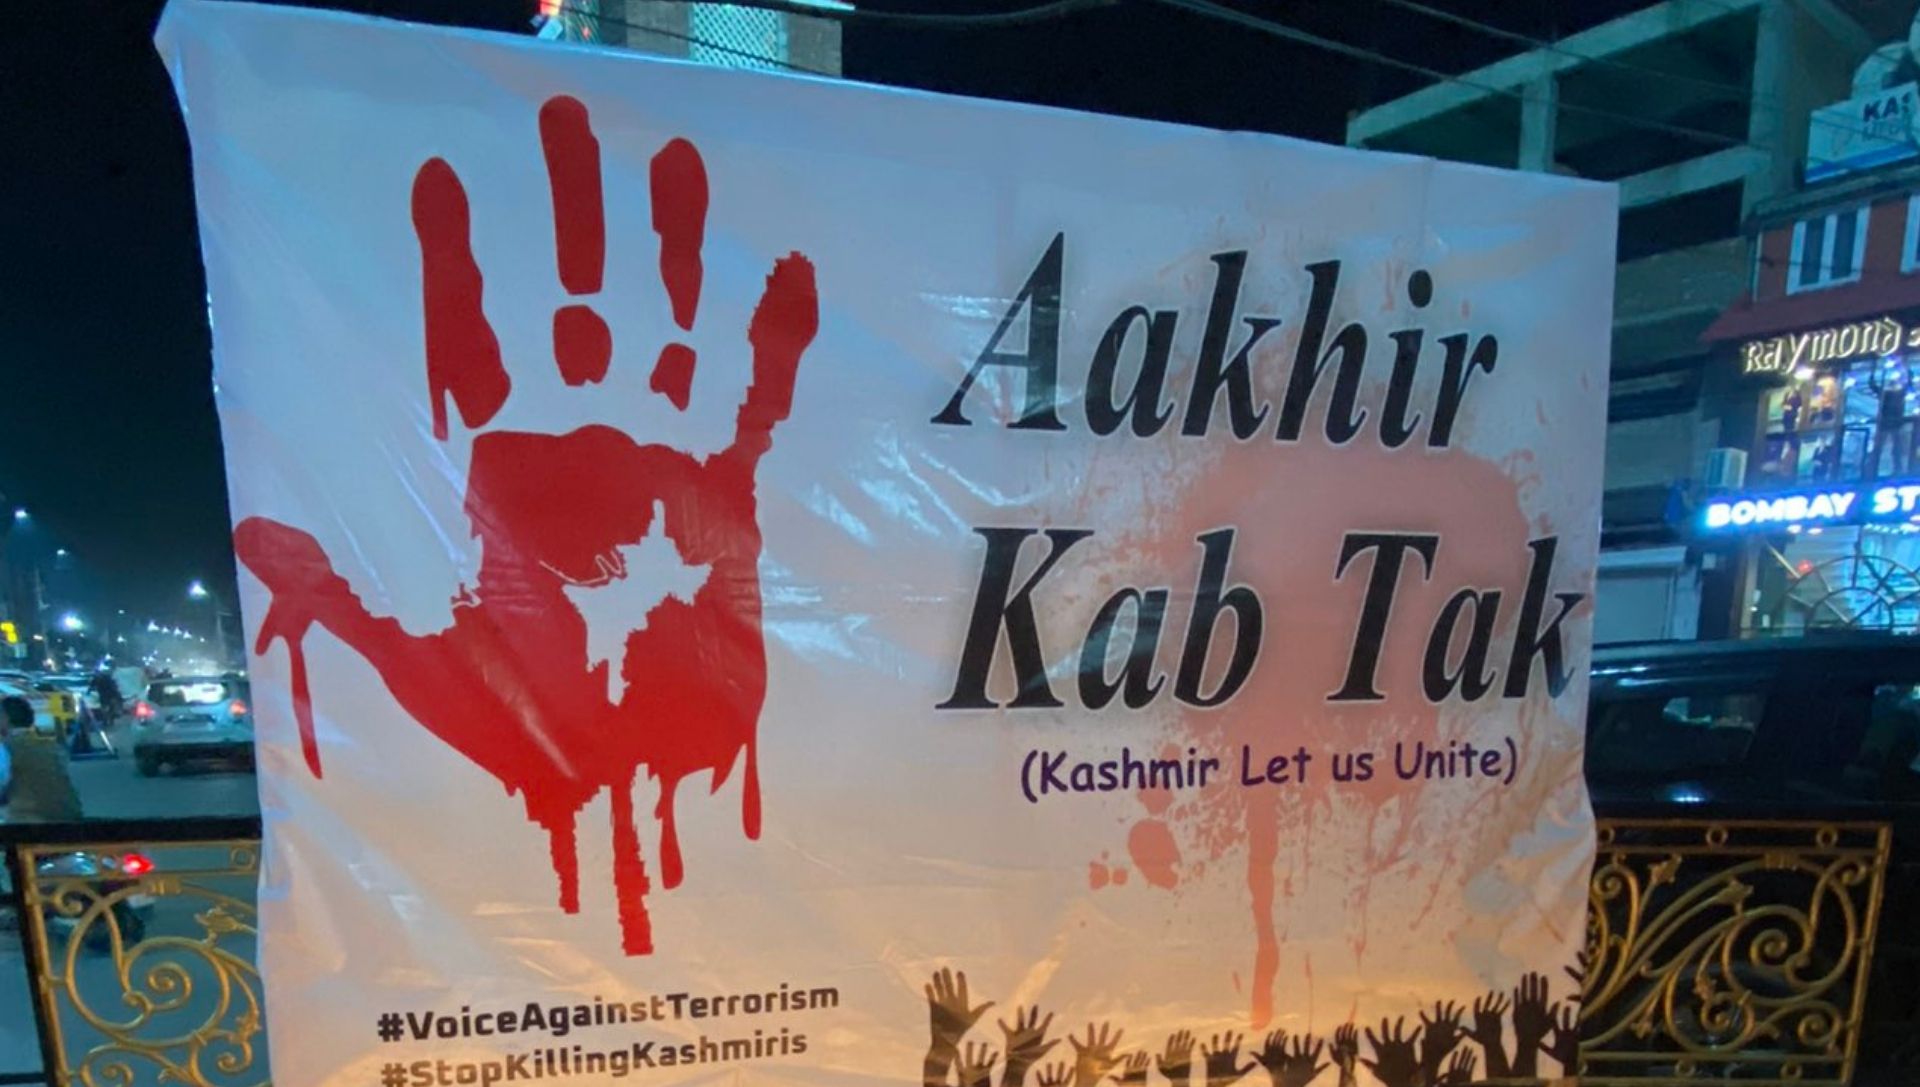 Aakhir Kab Tak (kashmir let us unite)